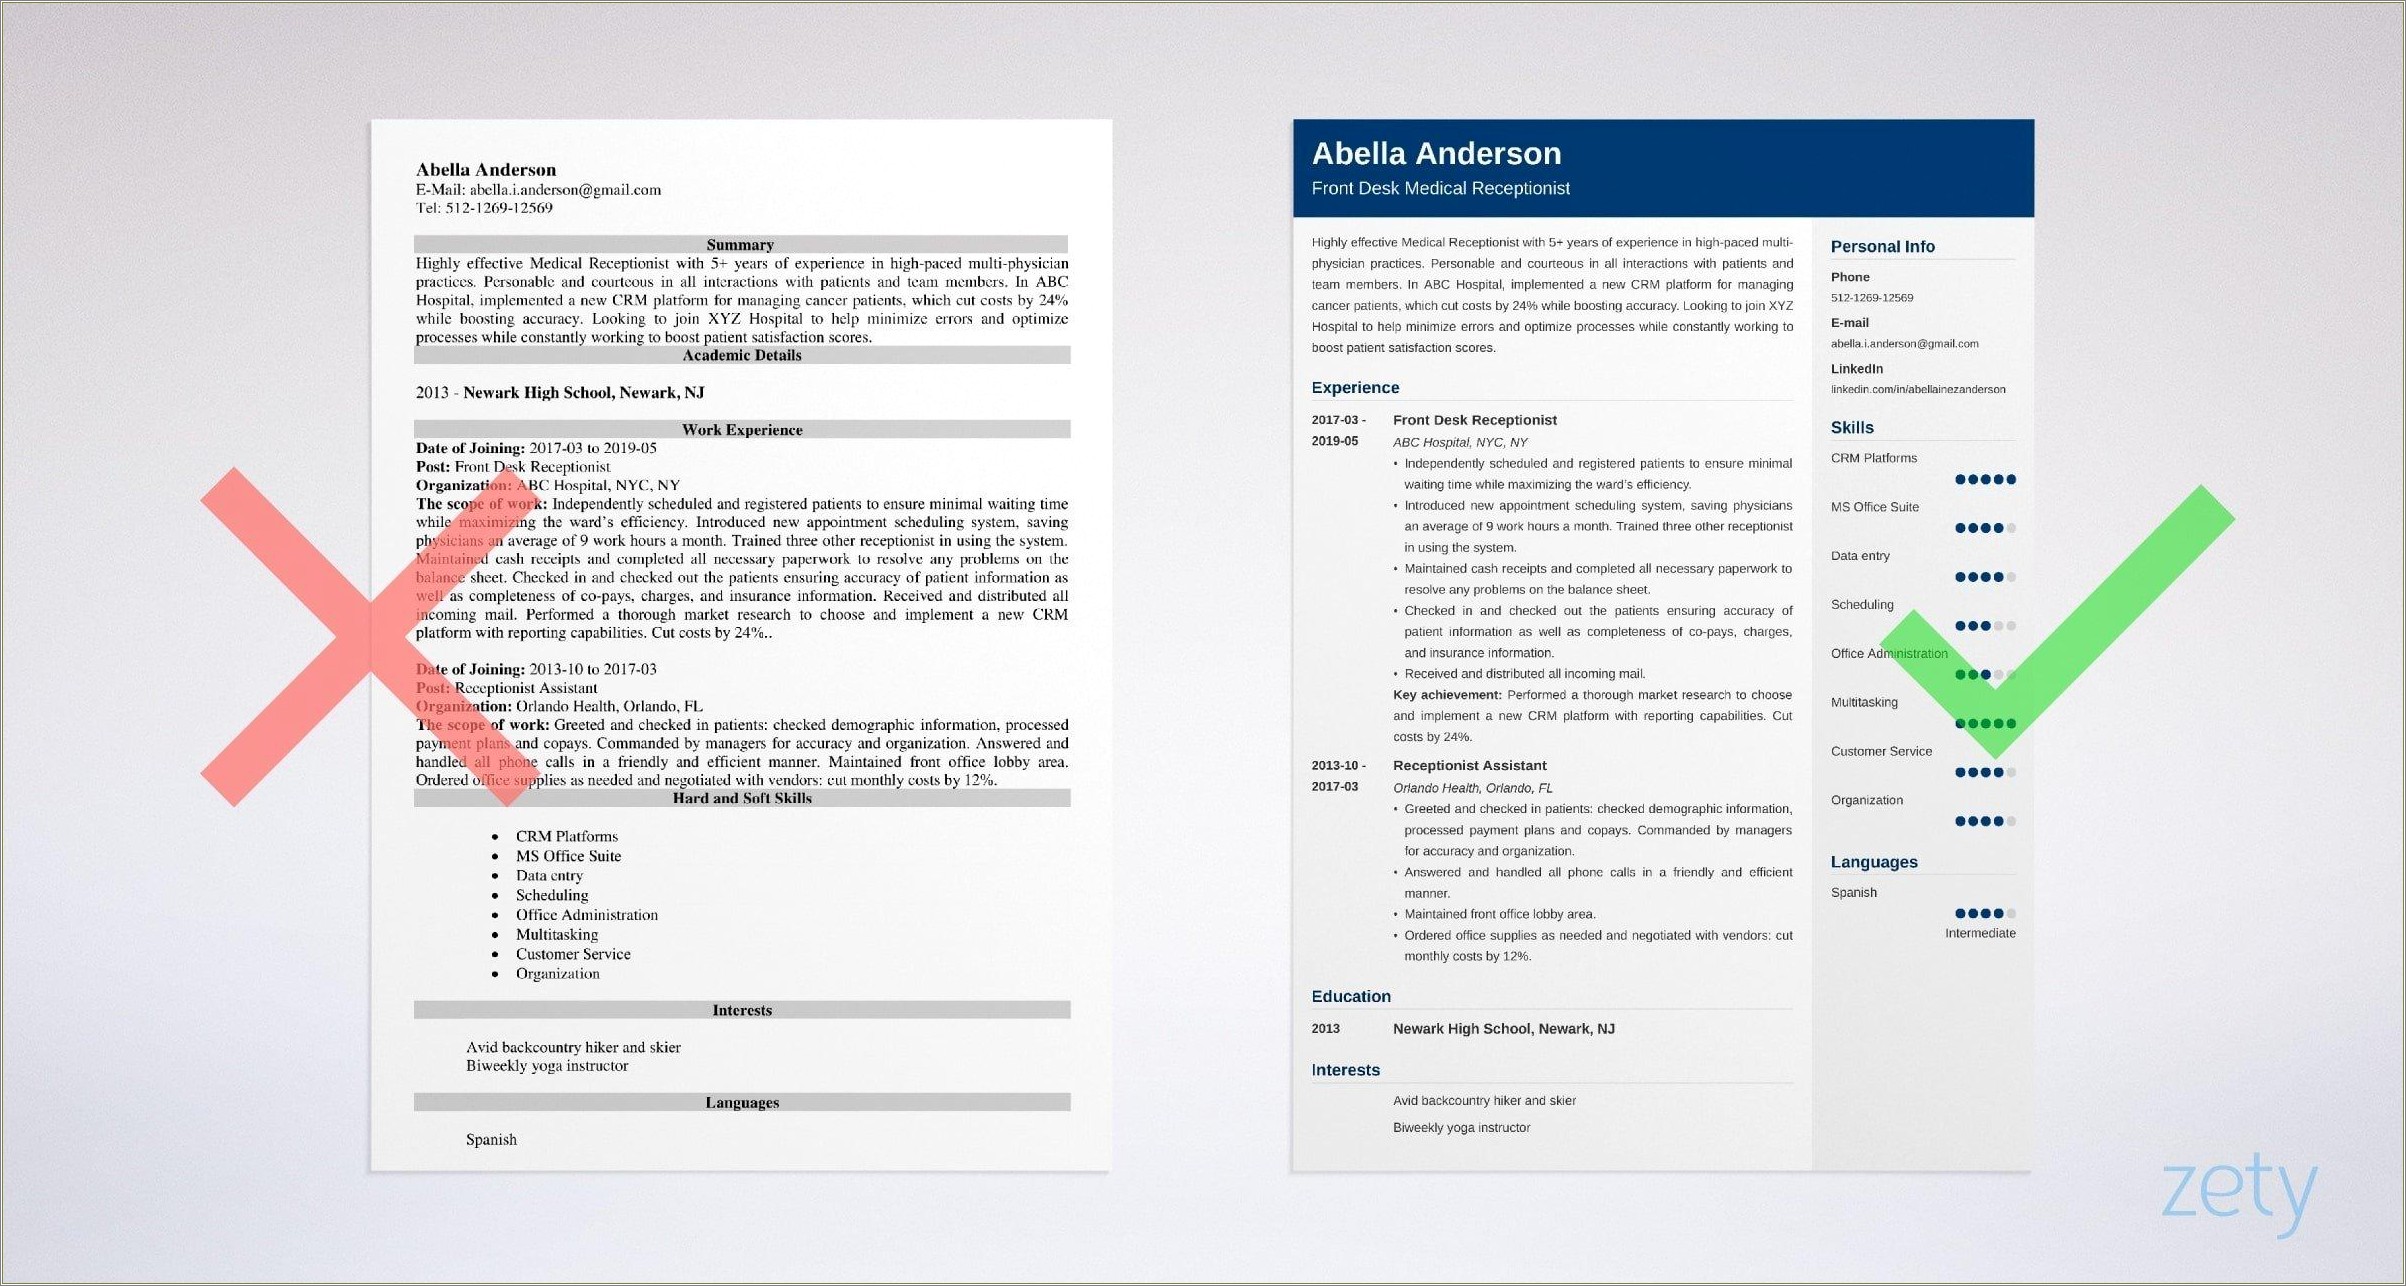 Medical Receptionist Professional Summary Resume Sample